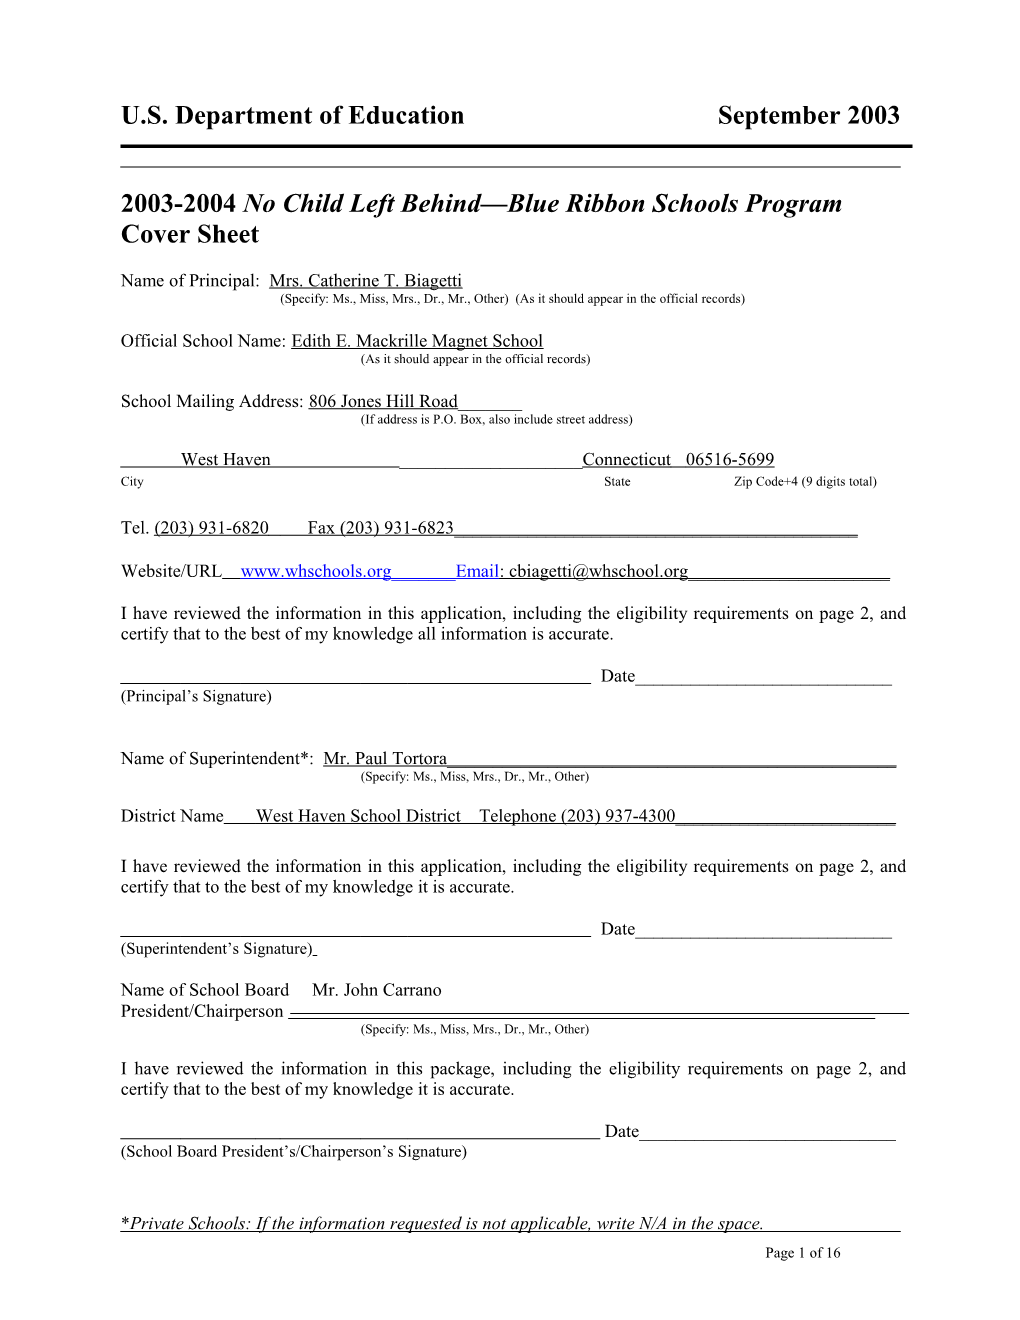 Edith E. Mackrille Magnet School 2004 No Child Left Behind-Blue Ribbon School Application